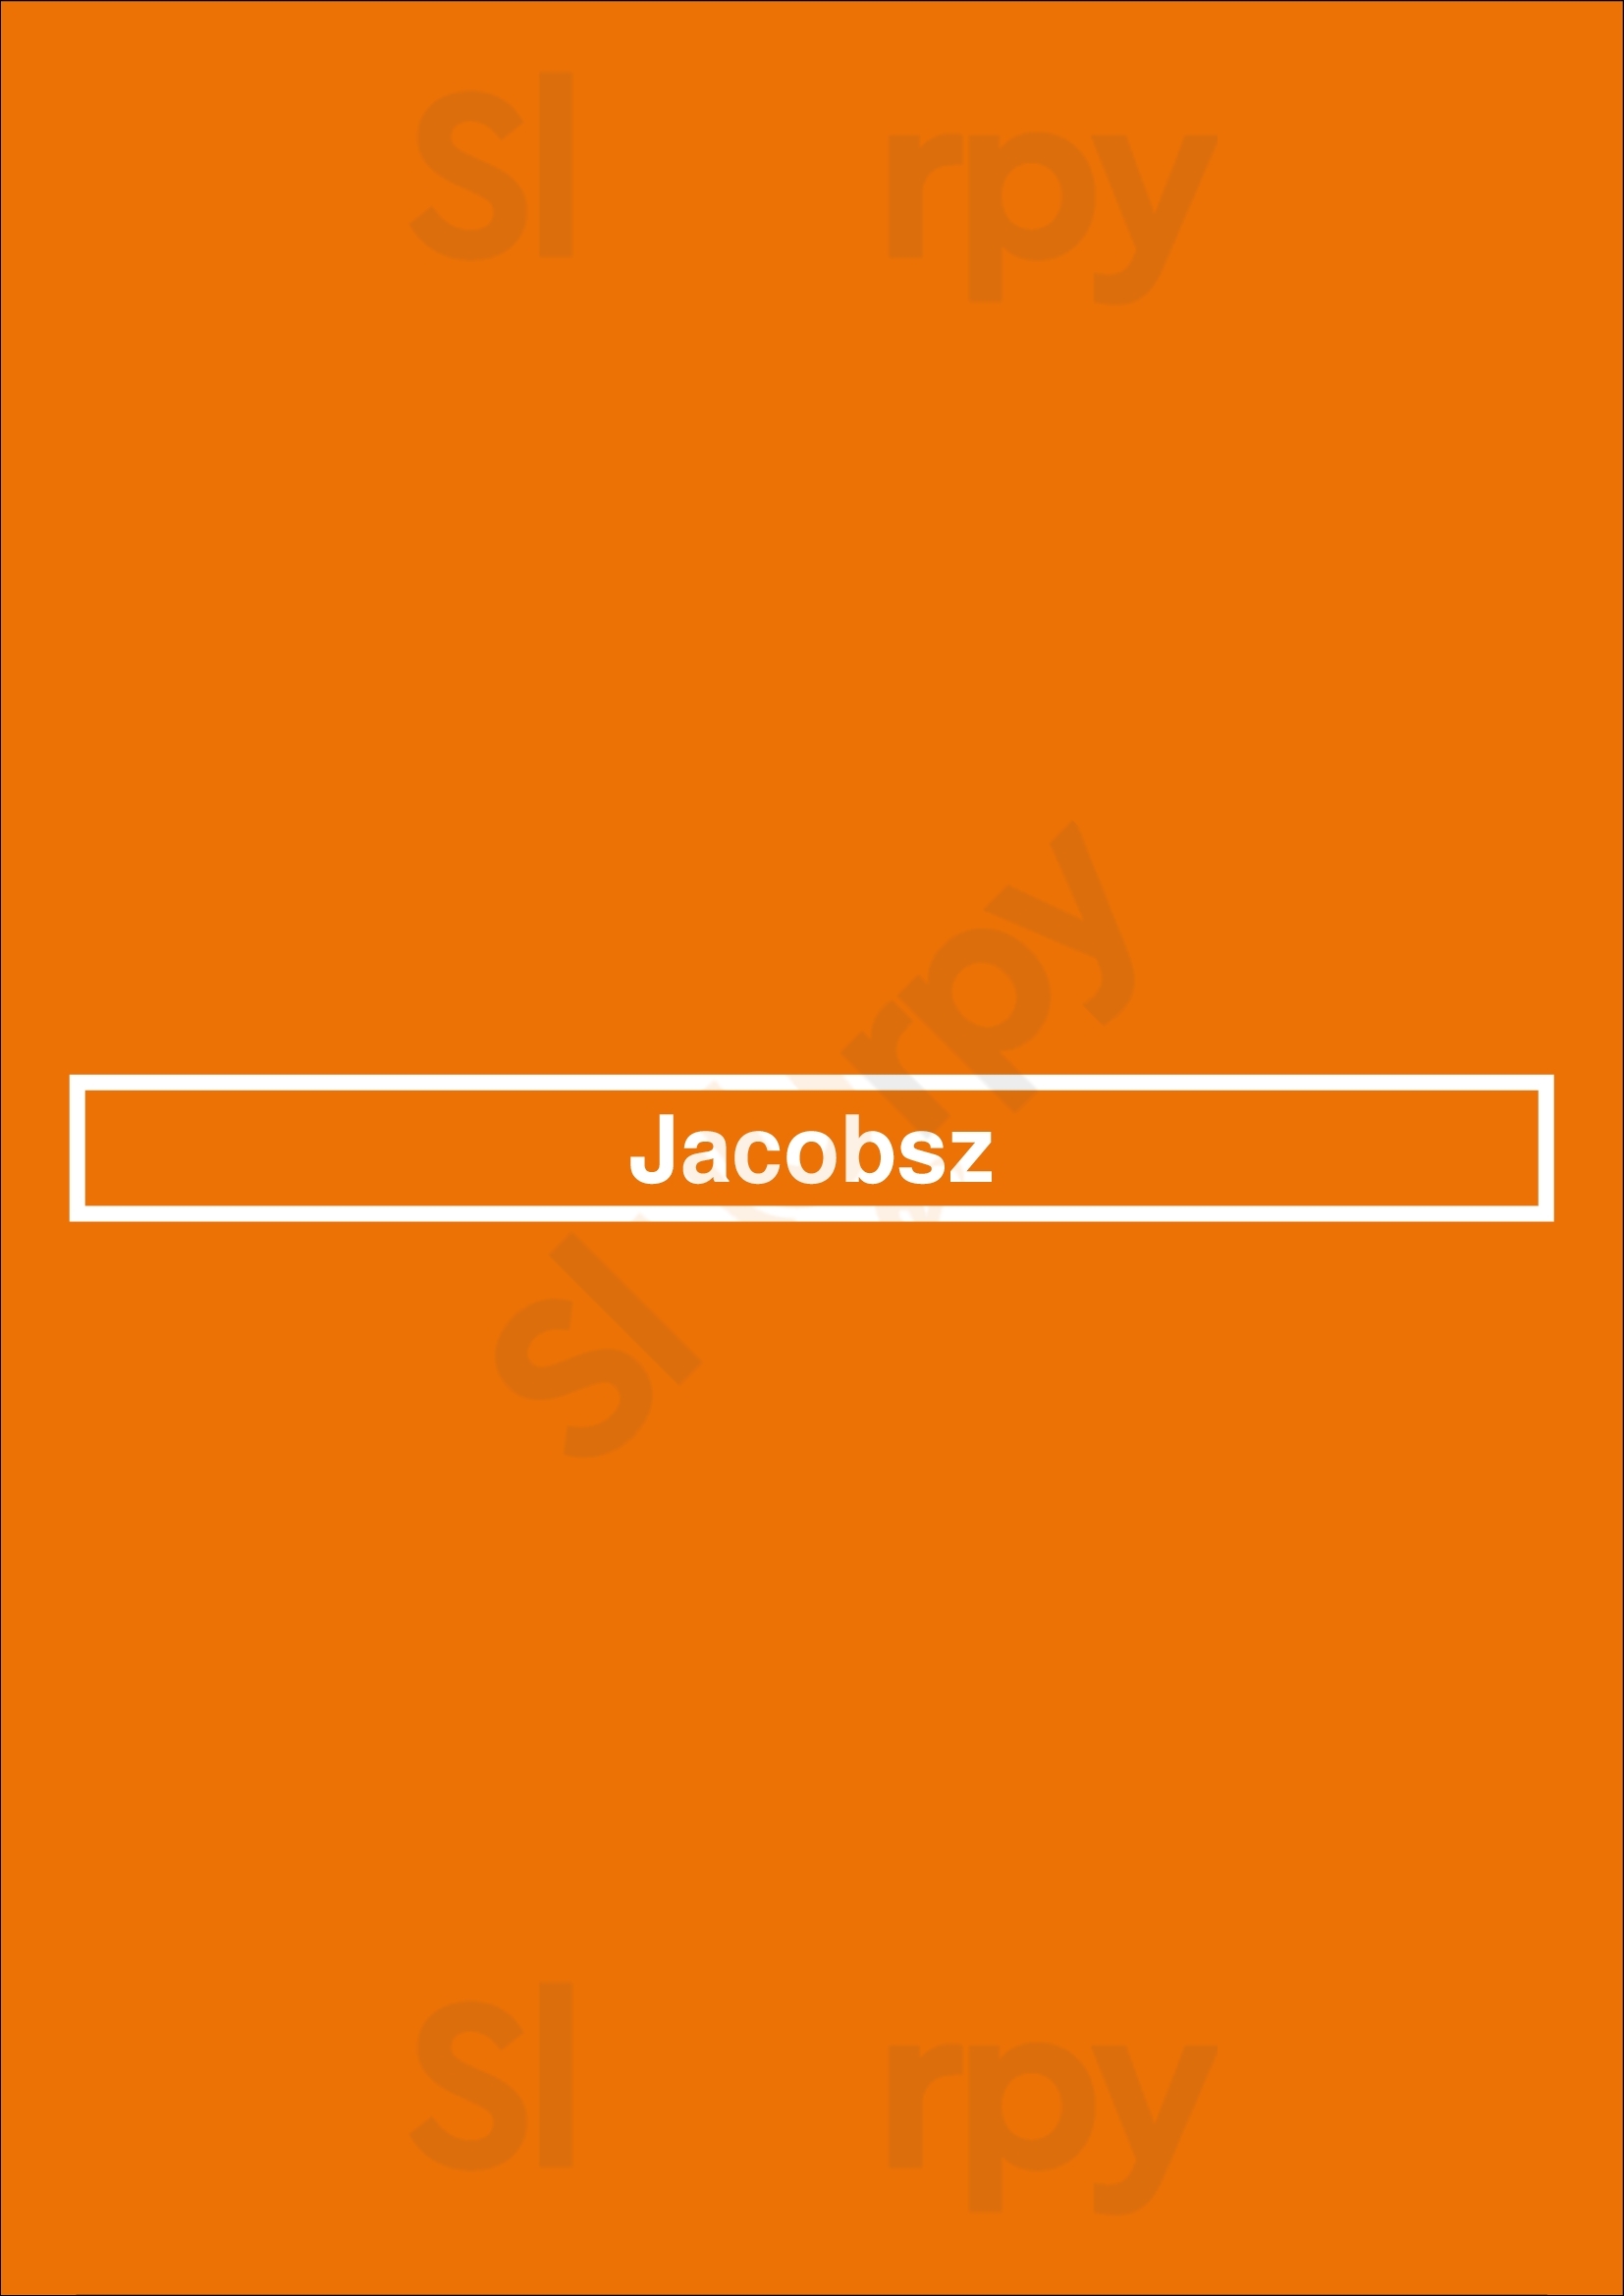 Jacobsz Amsterdam Menu - 1